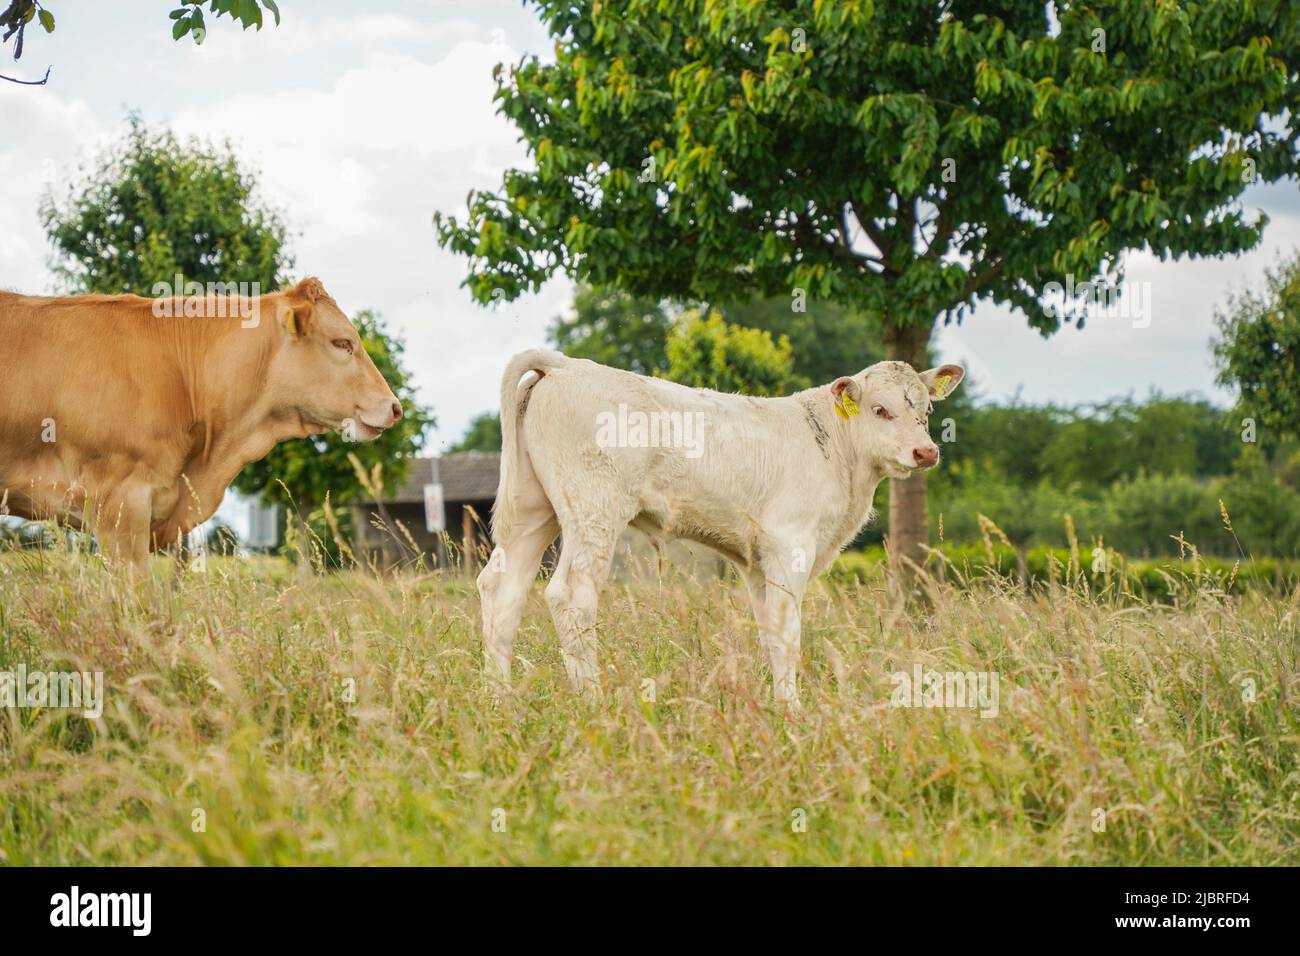 Junge Kuh grast grünes Gras Feld, mit erwachsenen Kuh daneben, Limburg, Niederlande. Stockfoto